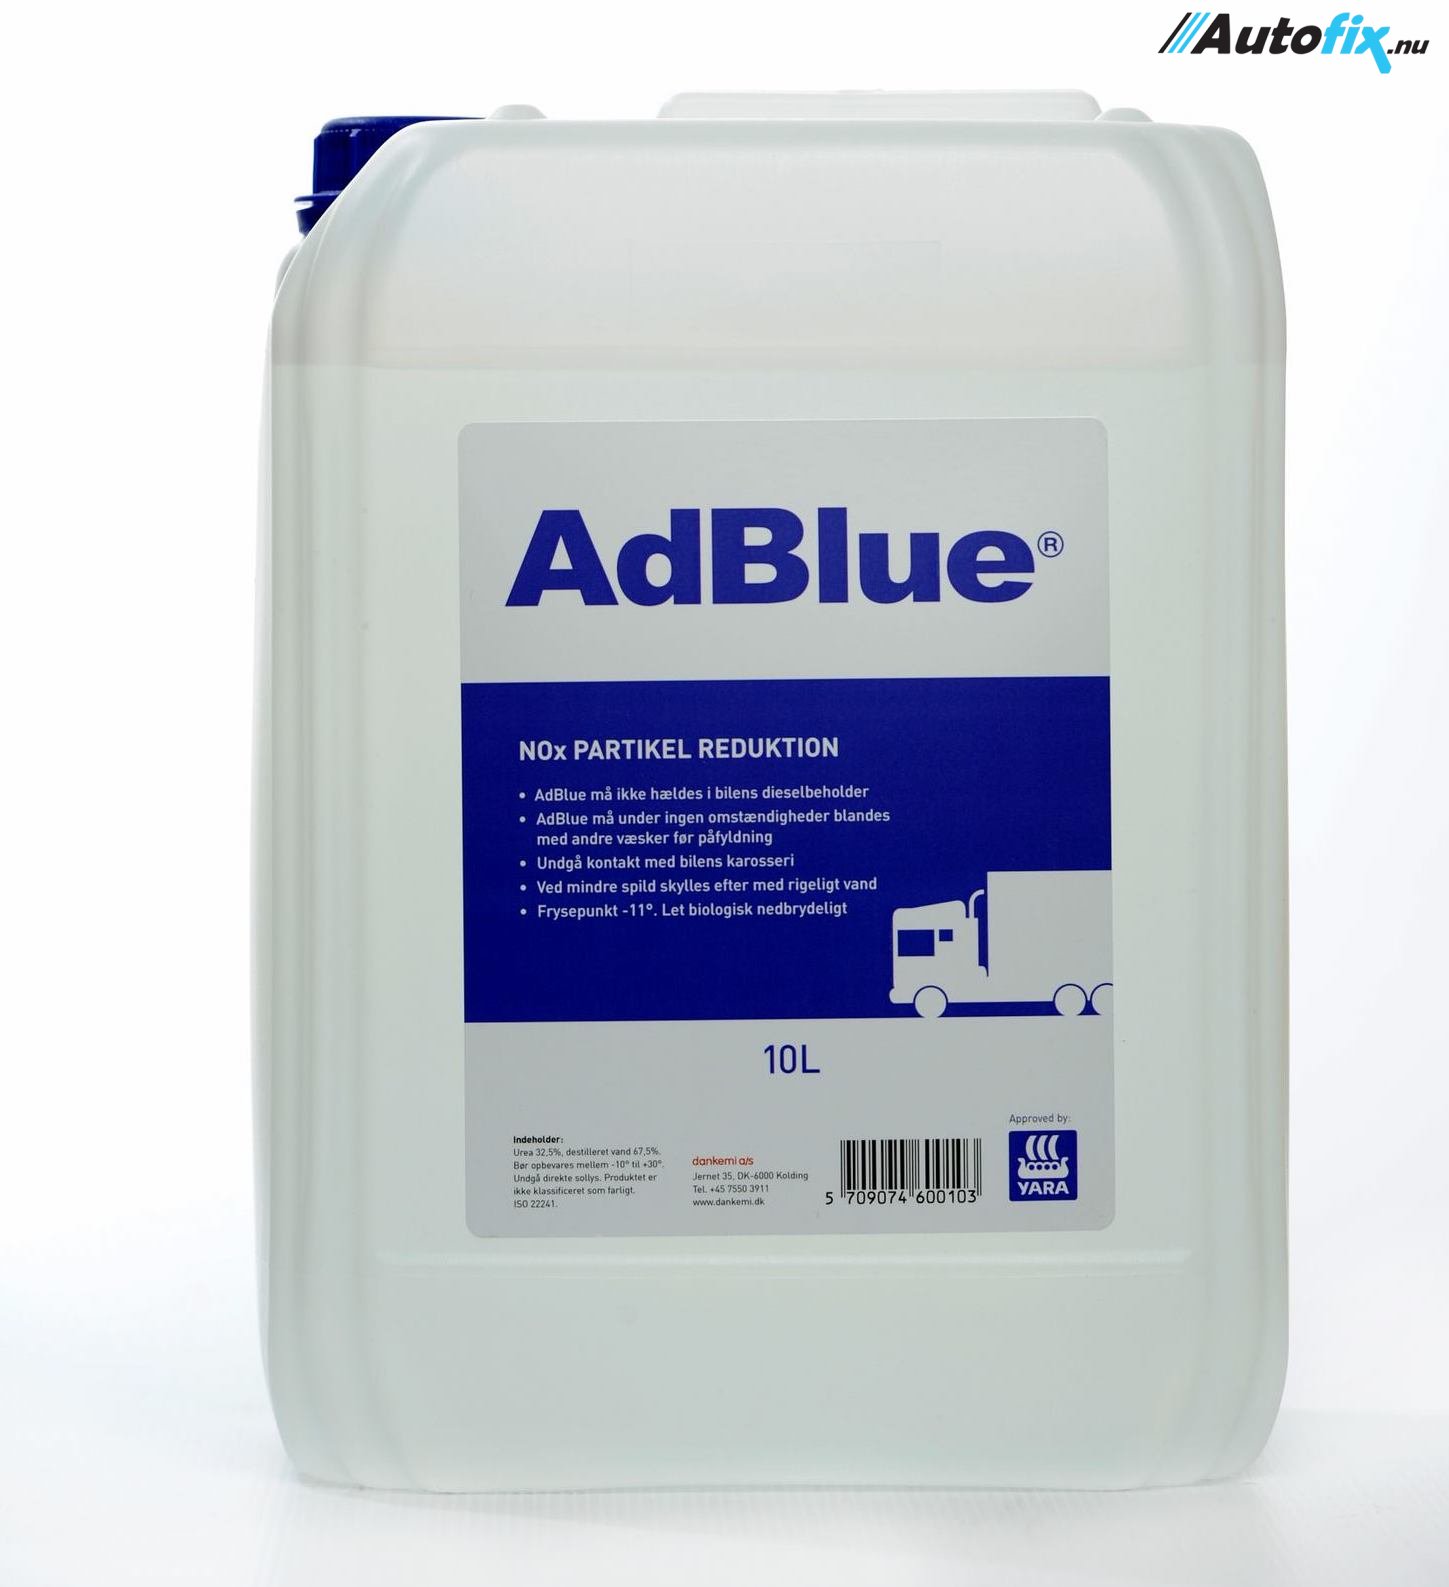 AdBlue Additiv - Med flextud - 10L - AdBlue Additiv, Pumper & Tilbehør -   ApS